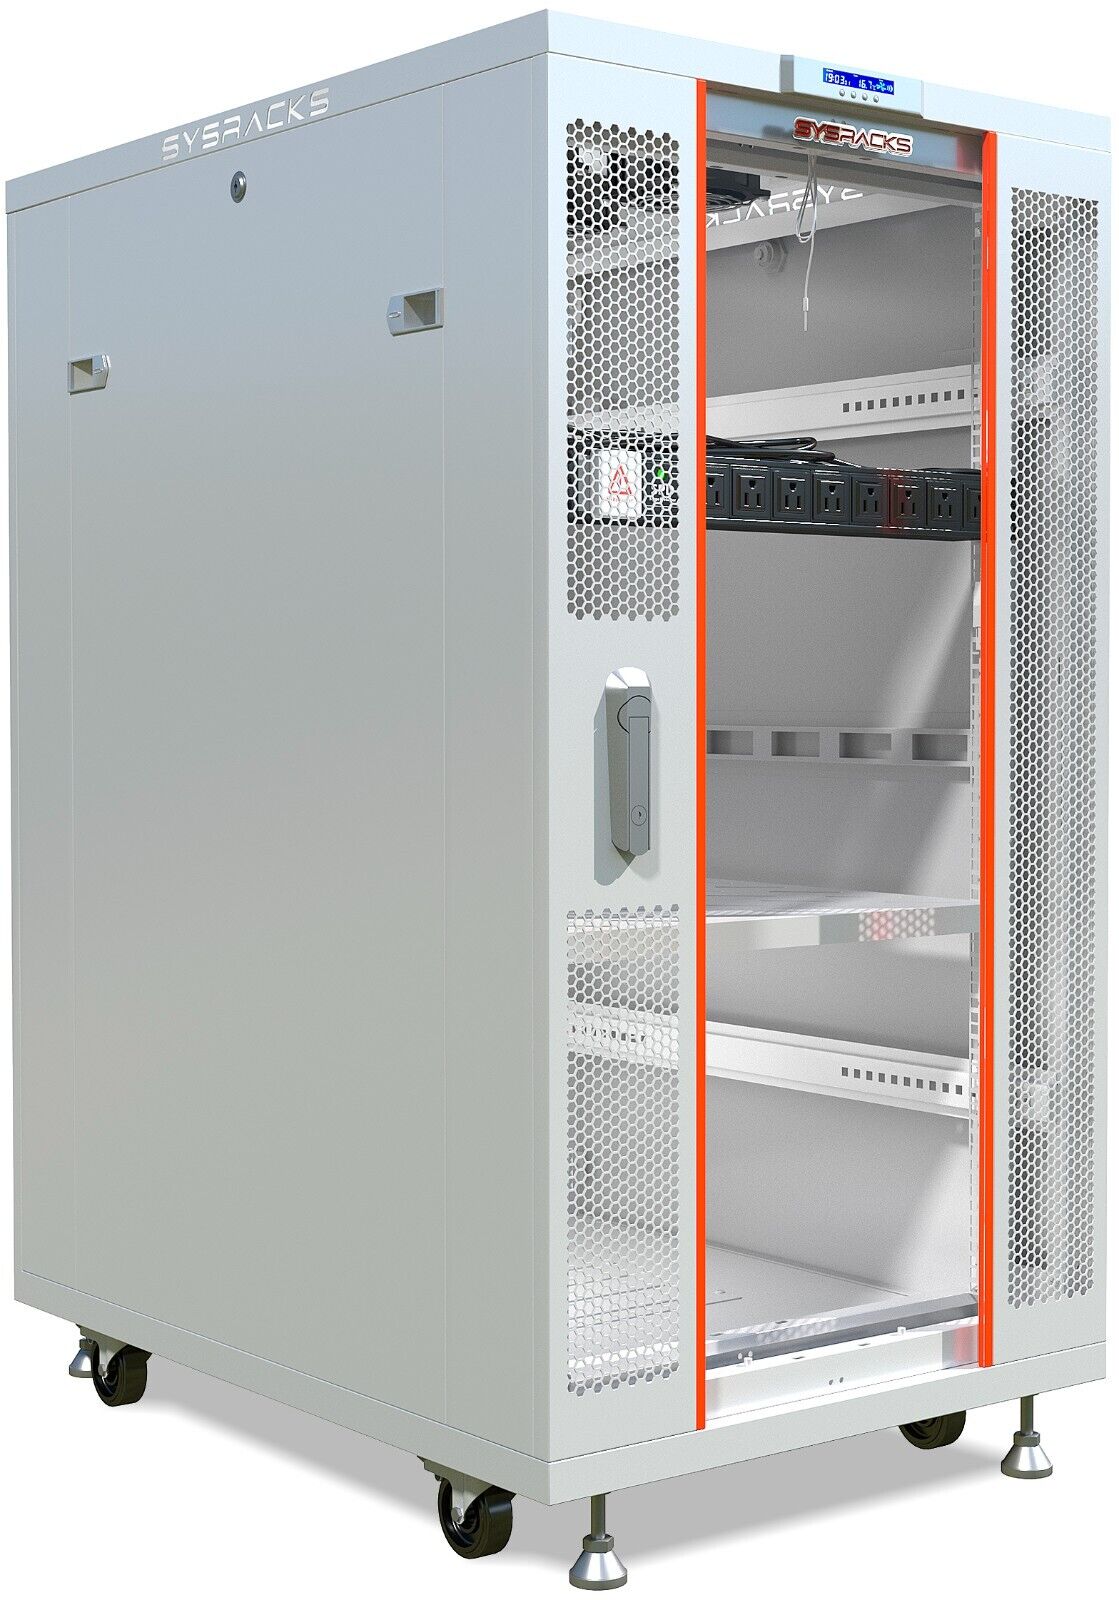 Server Rack 27U Enclosed 35-Inch Deep Cabinet Locking Networking Data Enclosure